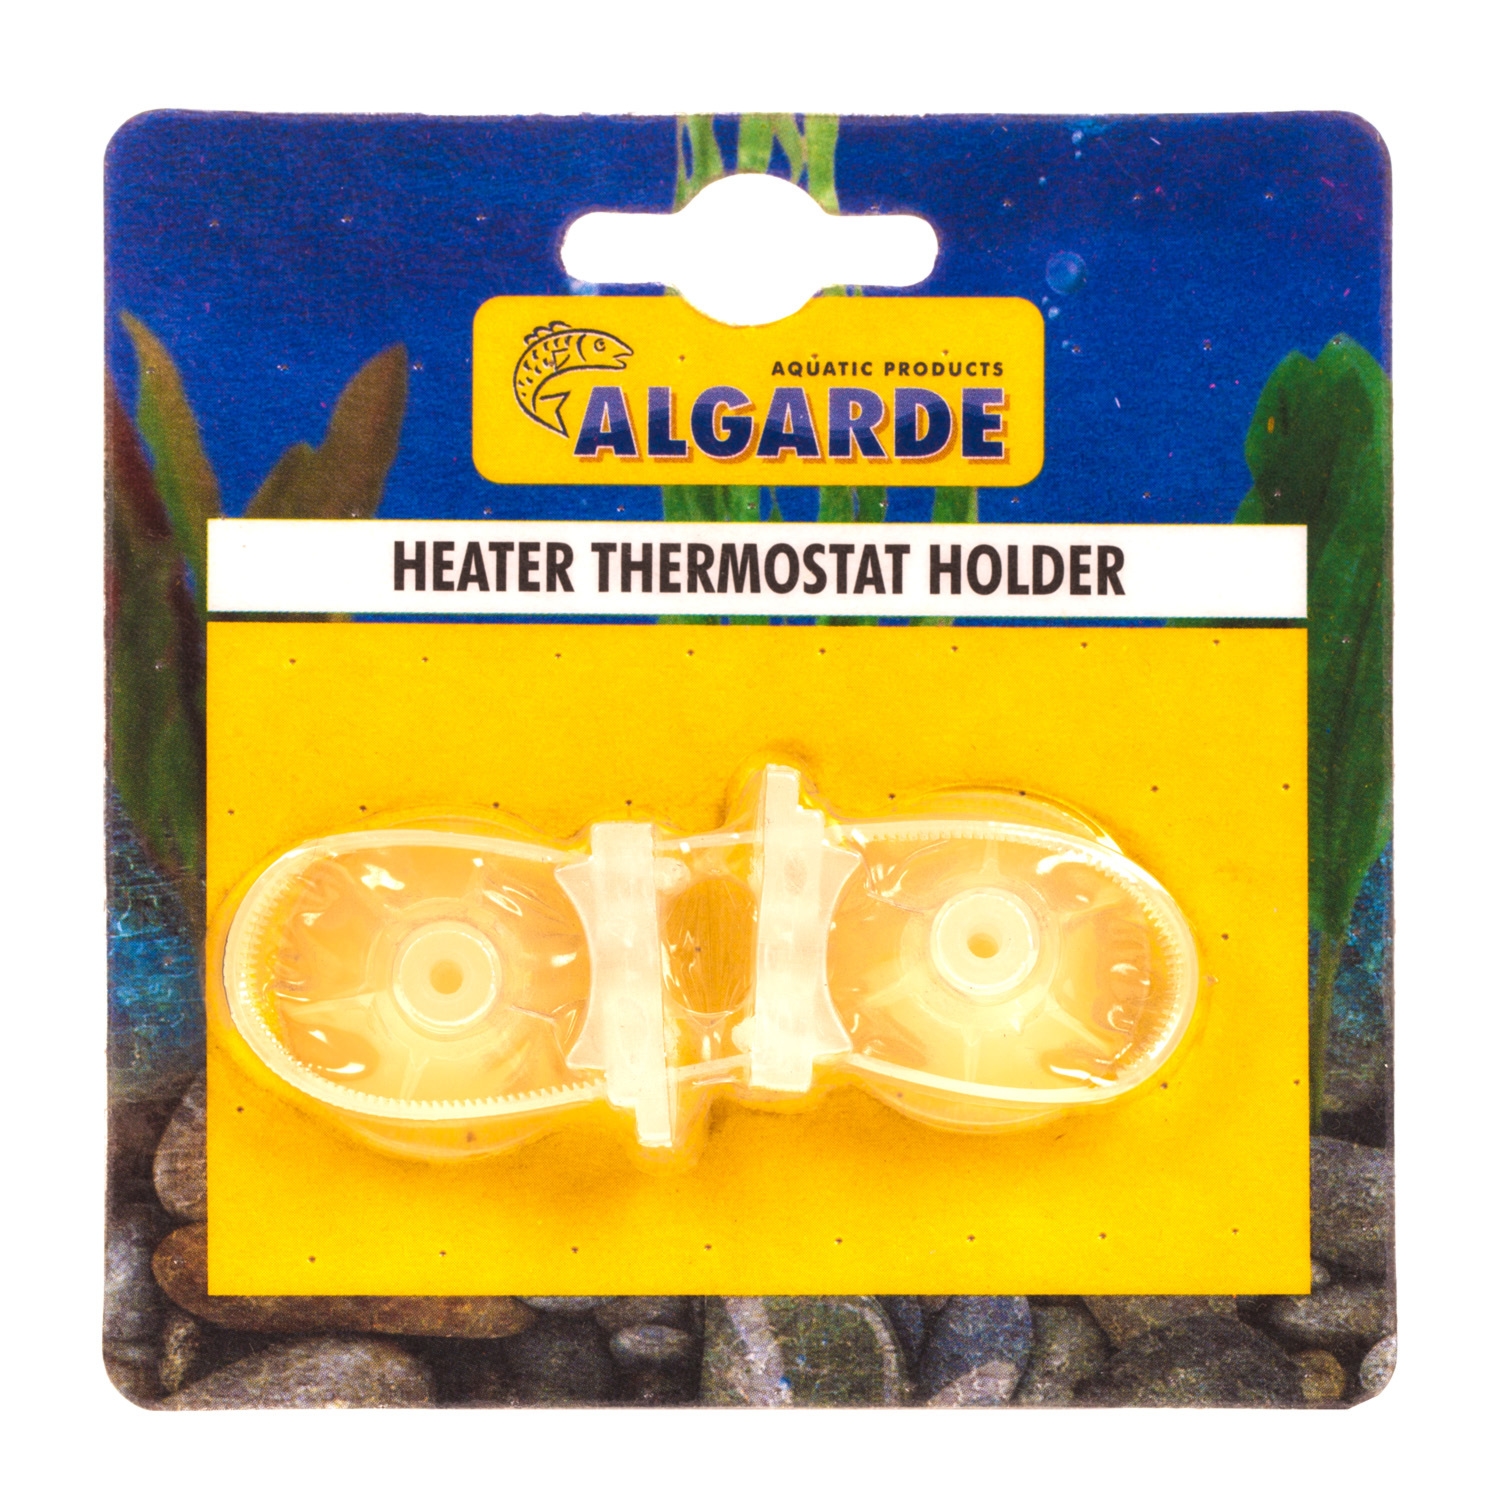 Algarde Heater Thermostat Holder Image 1